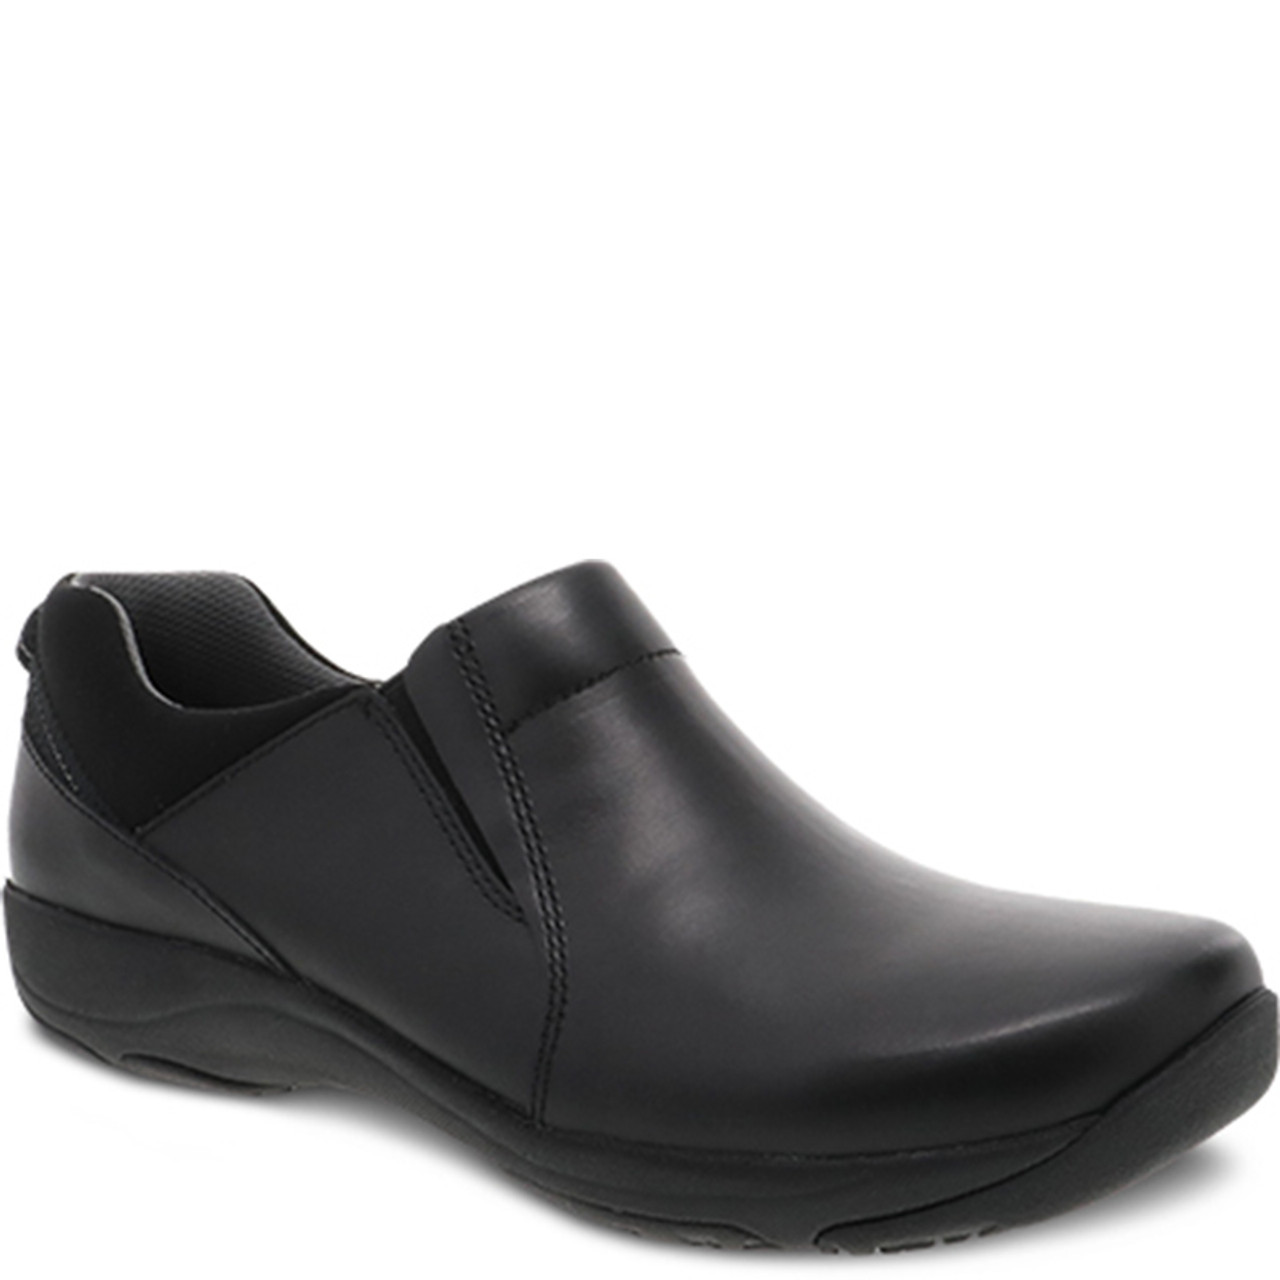 Dansko NECI Slip Resistant Work Shoes 